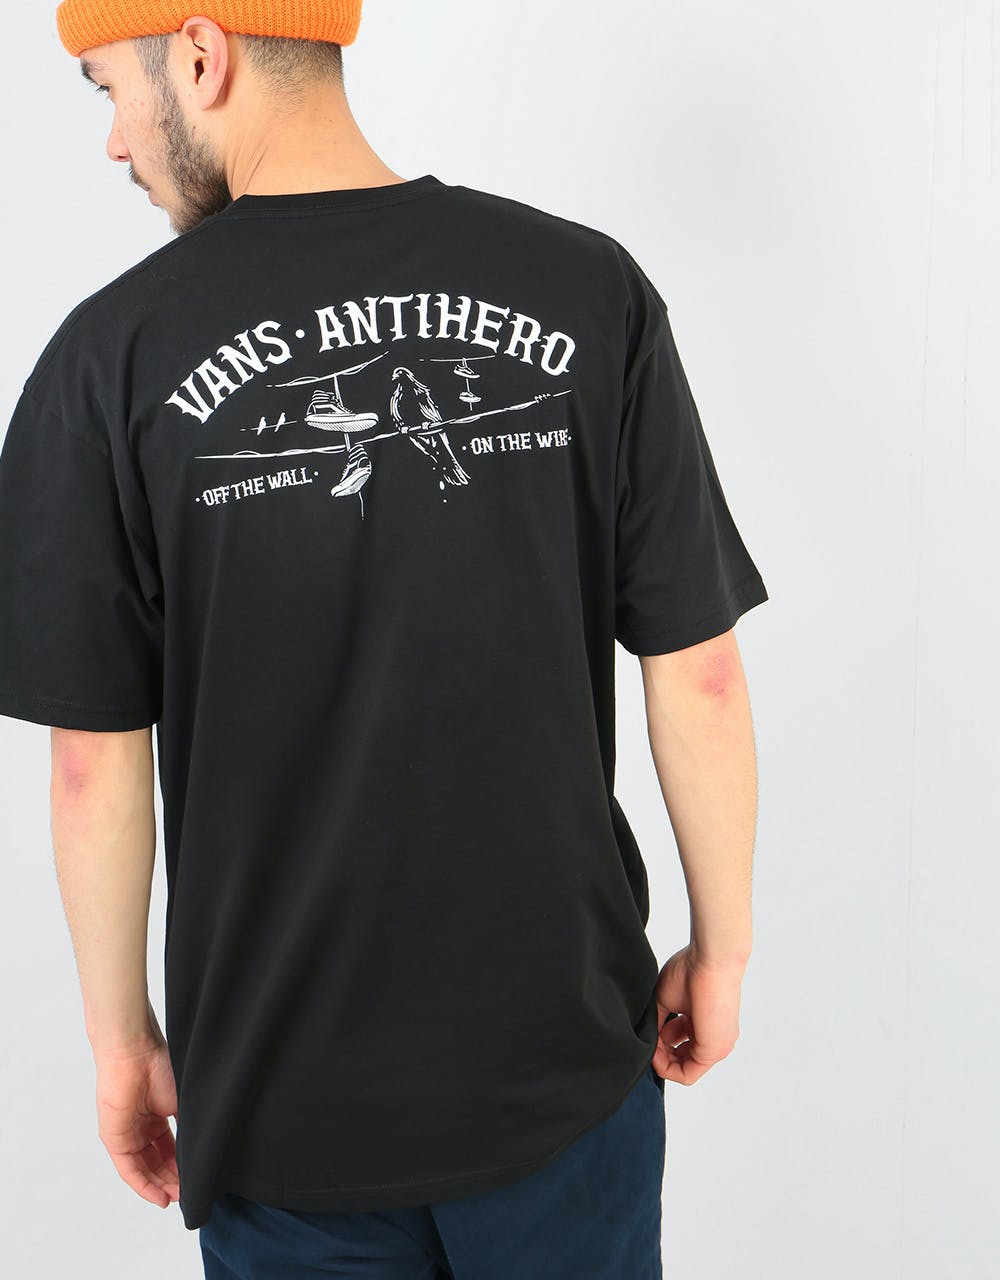 Vans x Anti Hero On the Wire T-Shirt - Black